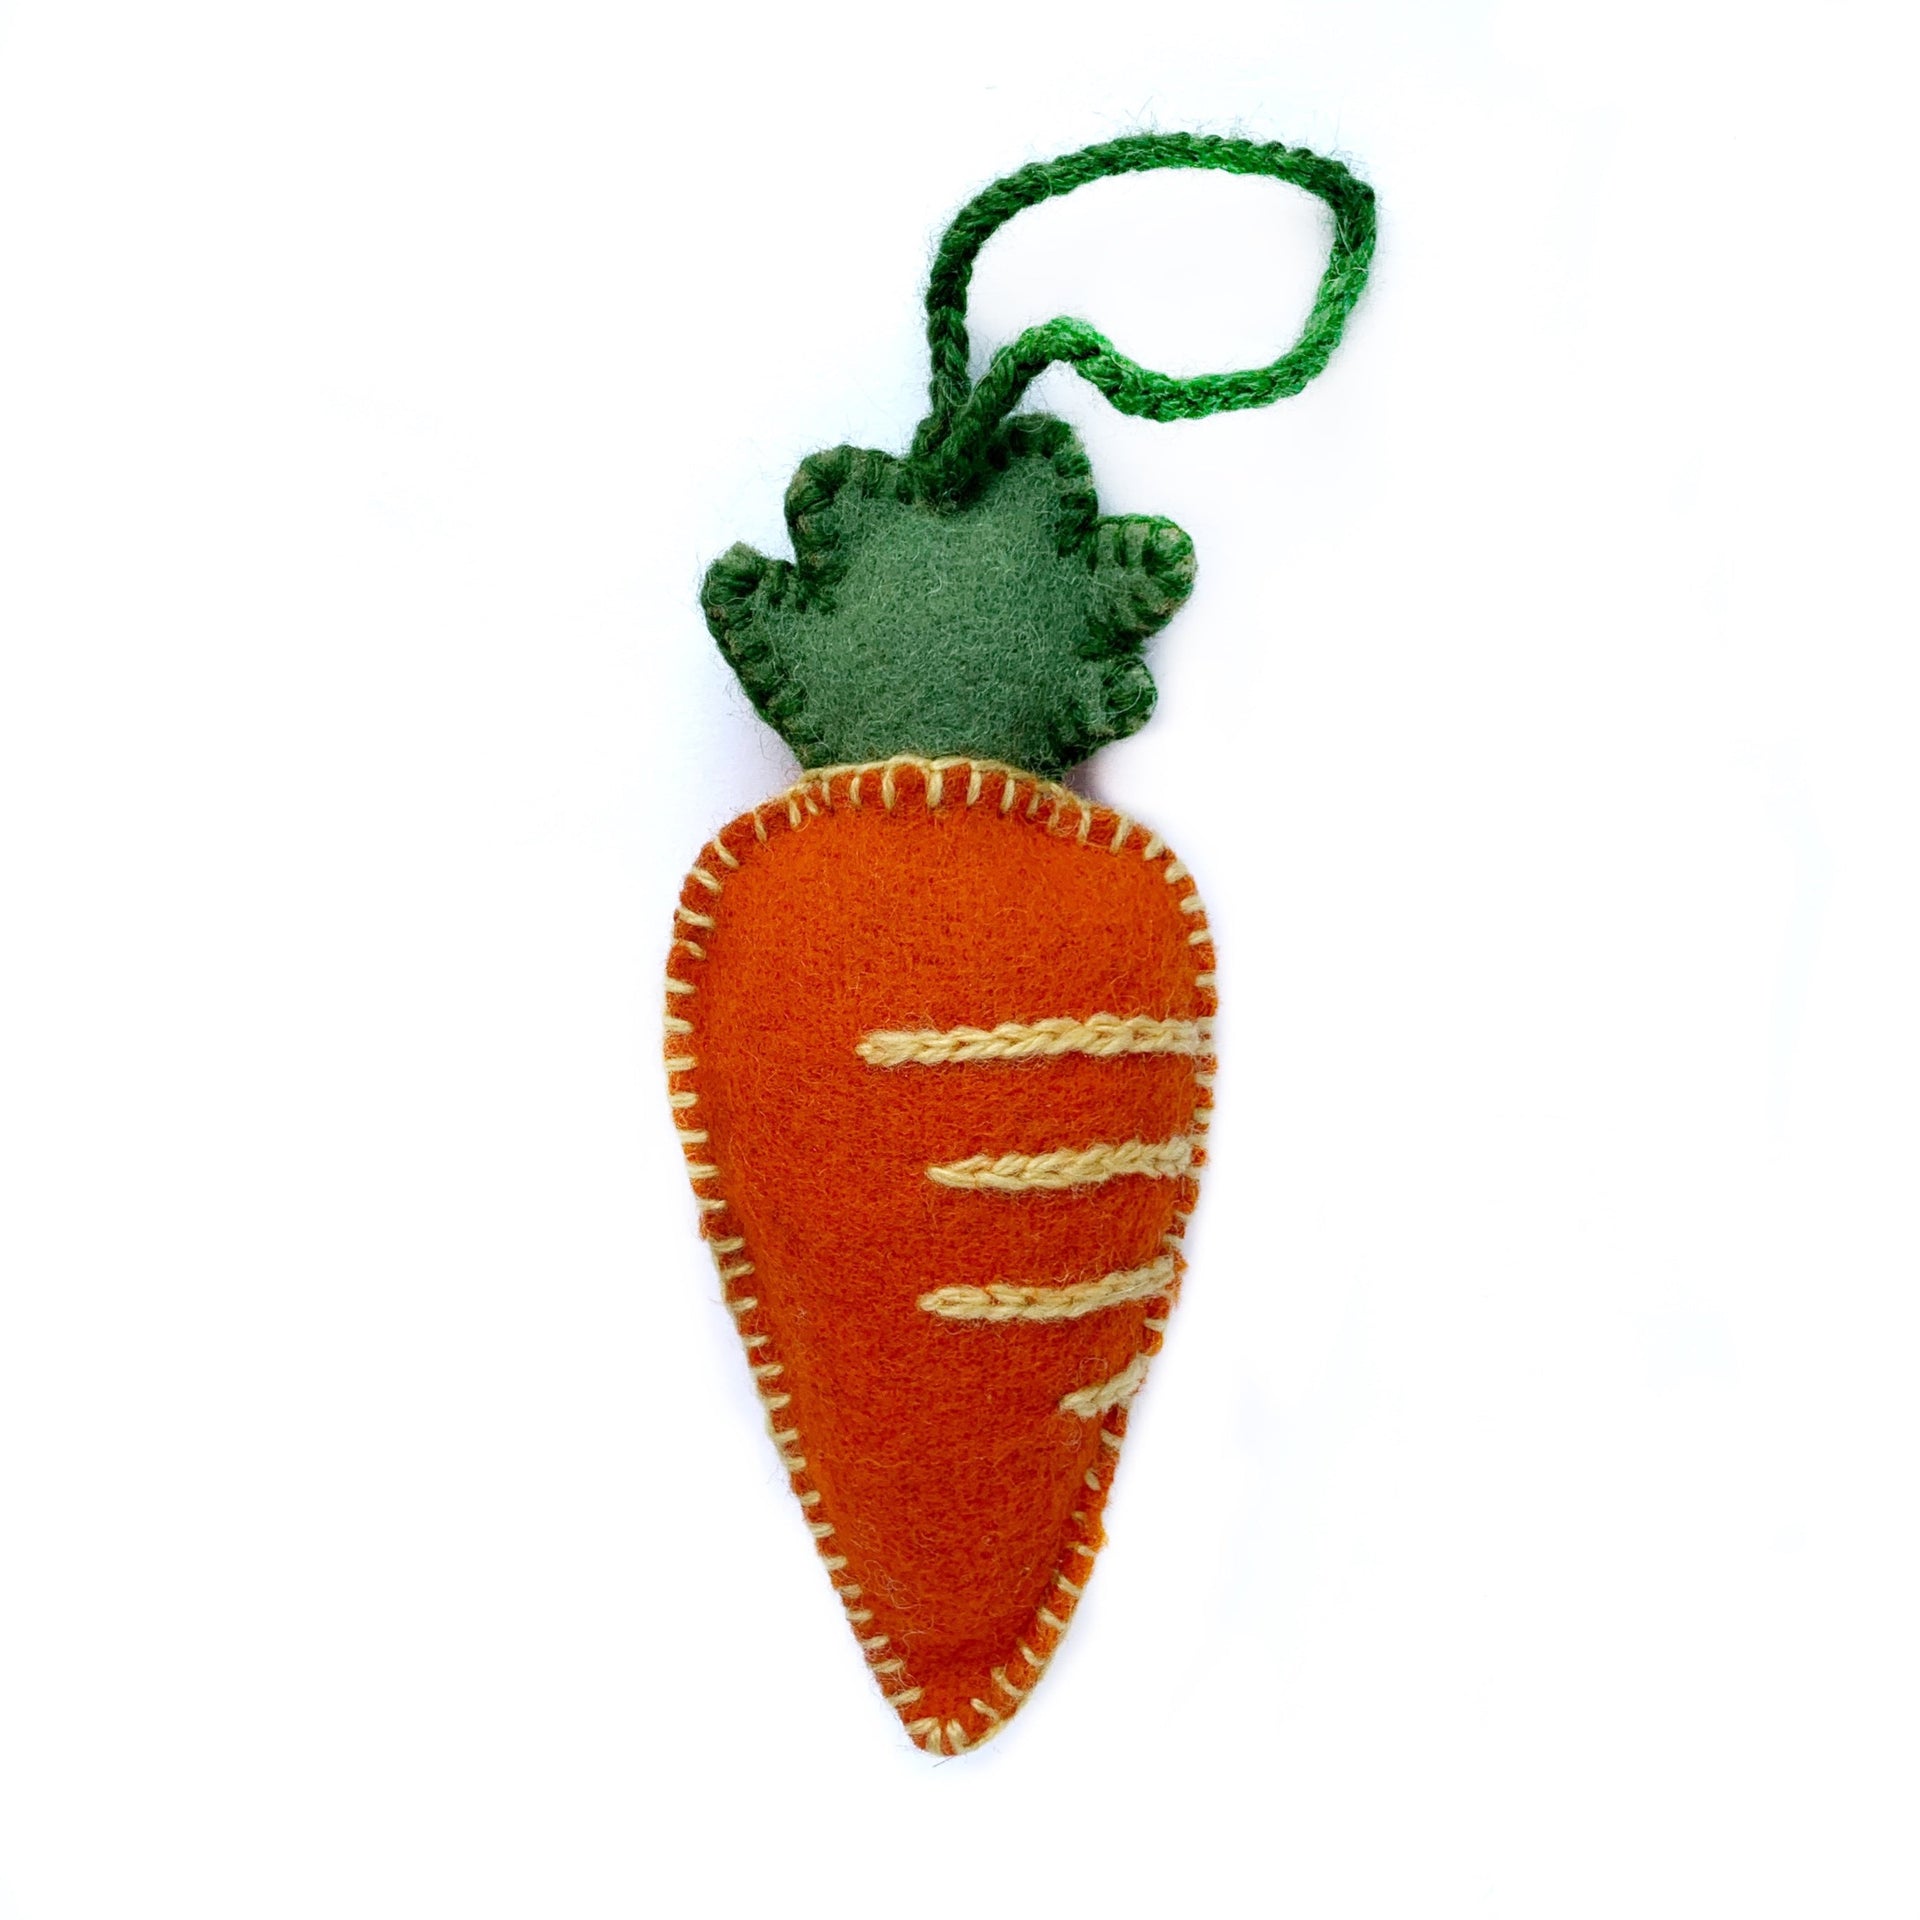 Handmade orange carrot Easter ornament from Peru